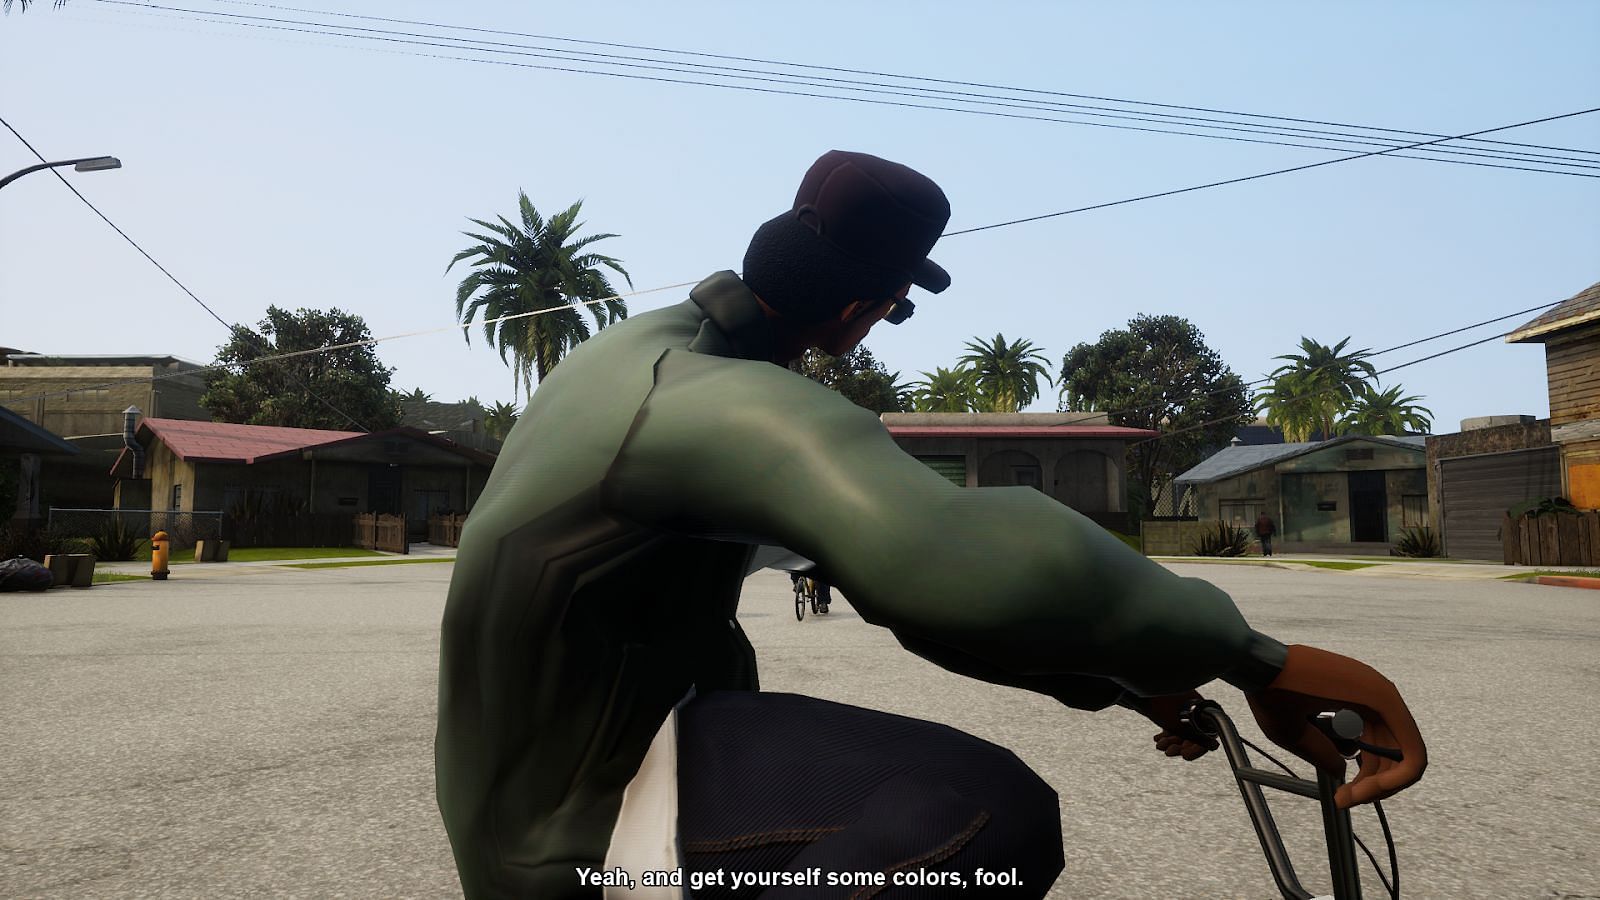 Grand Theft Auto: San Andreas (PS2) / Grand Theft Auto: San Andreas –  Definitive Edition (PS4) Review – Hogan Reviews